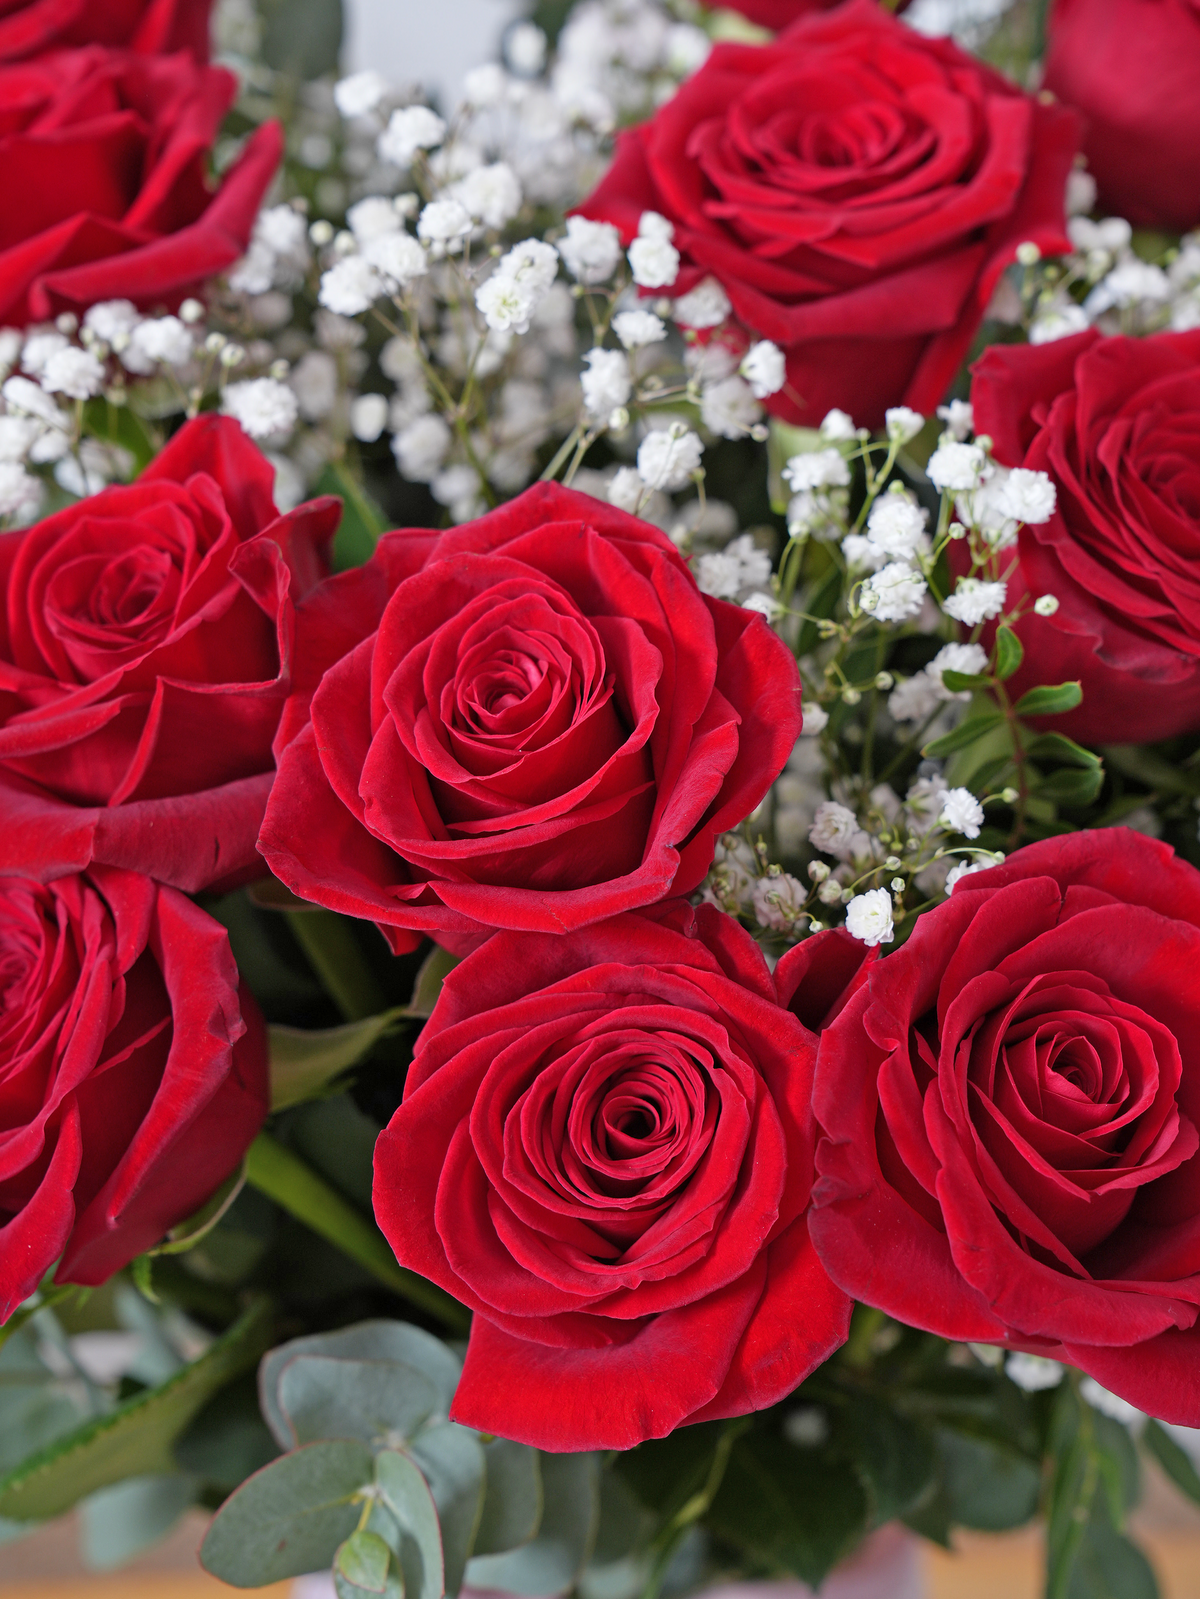 24 Long Stem Red Roses - Vase